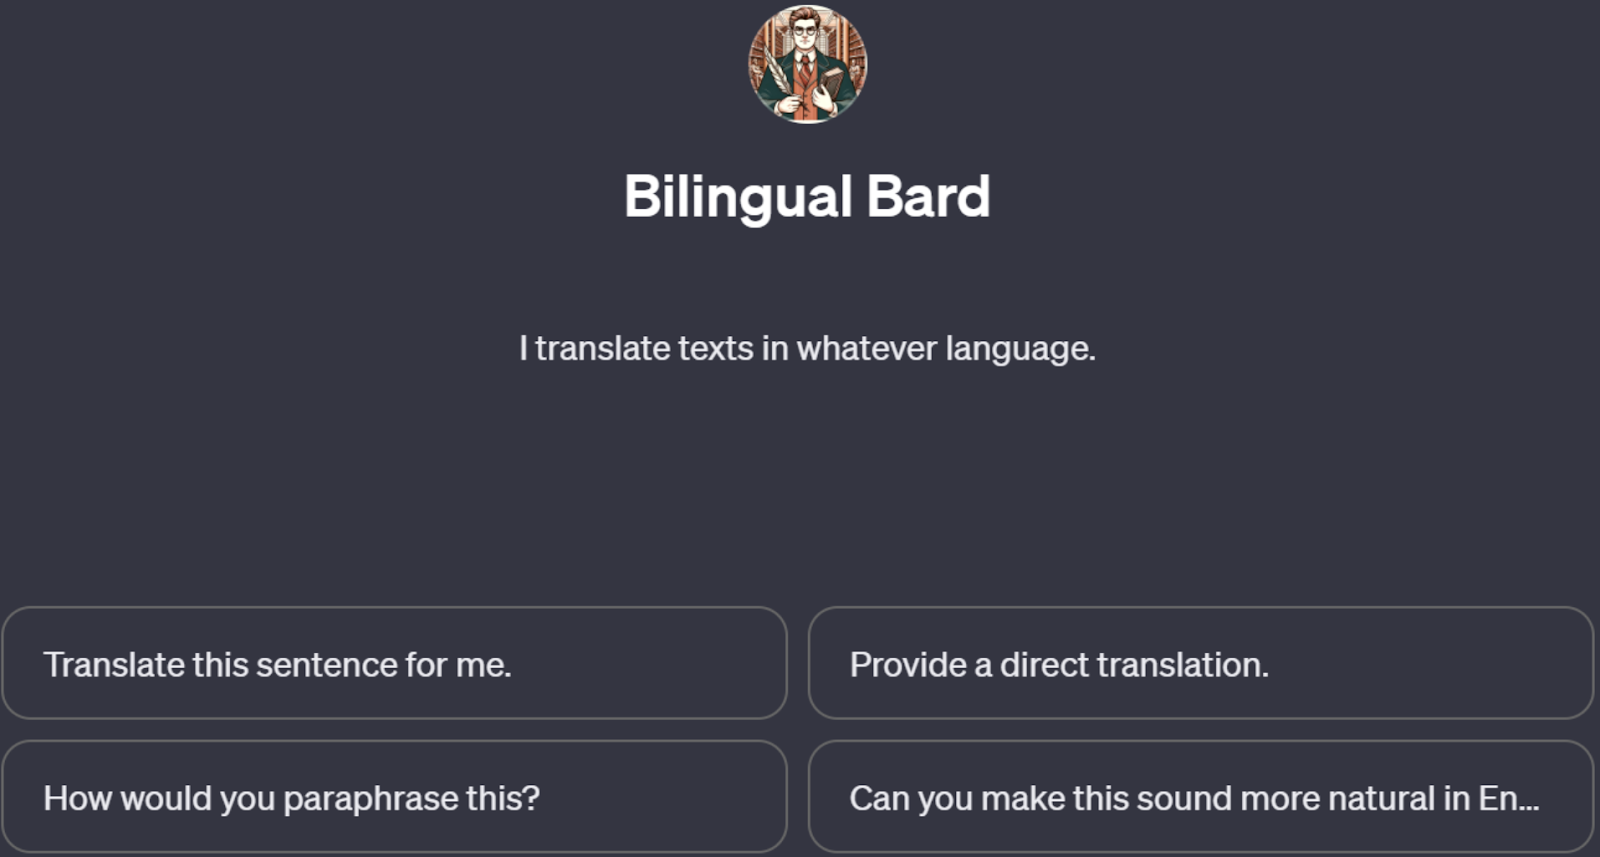 Bilingual Bard GPT